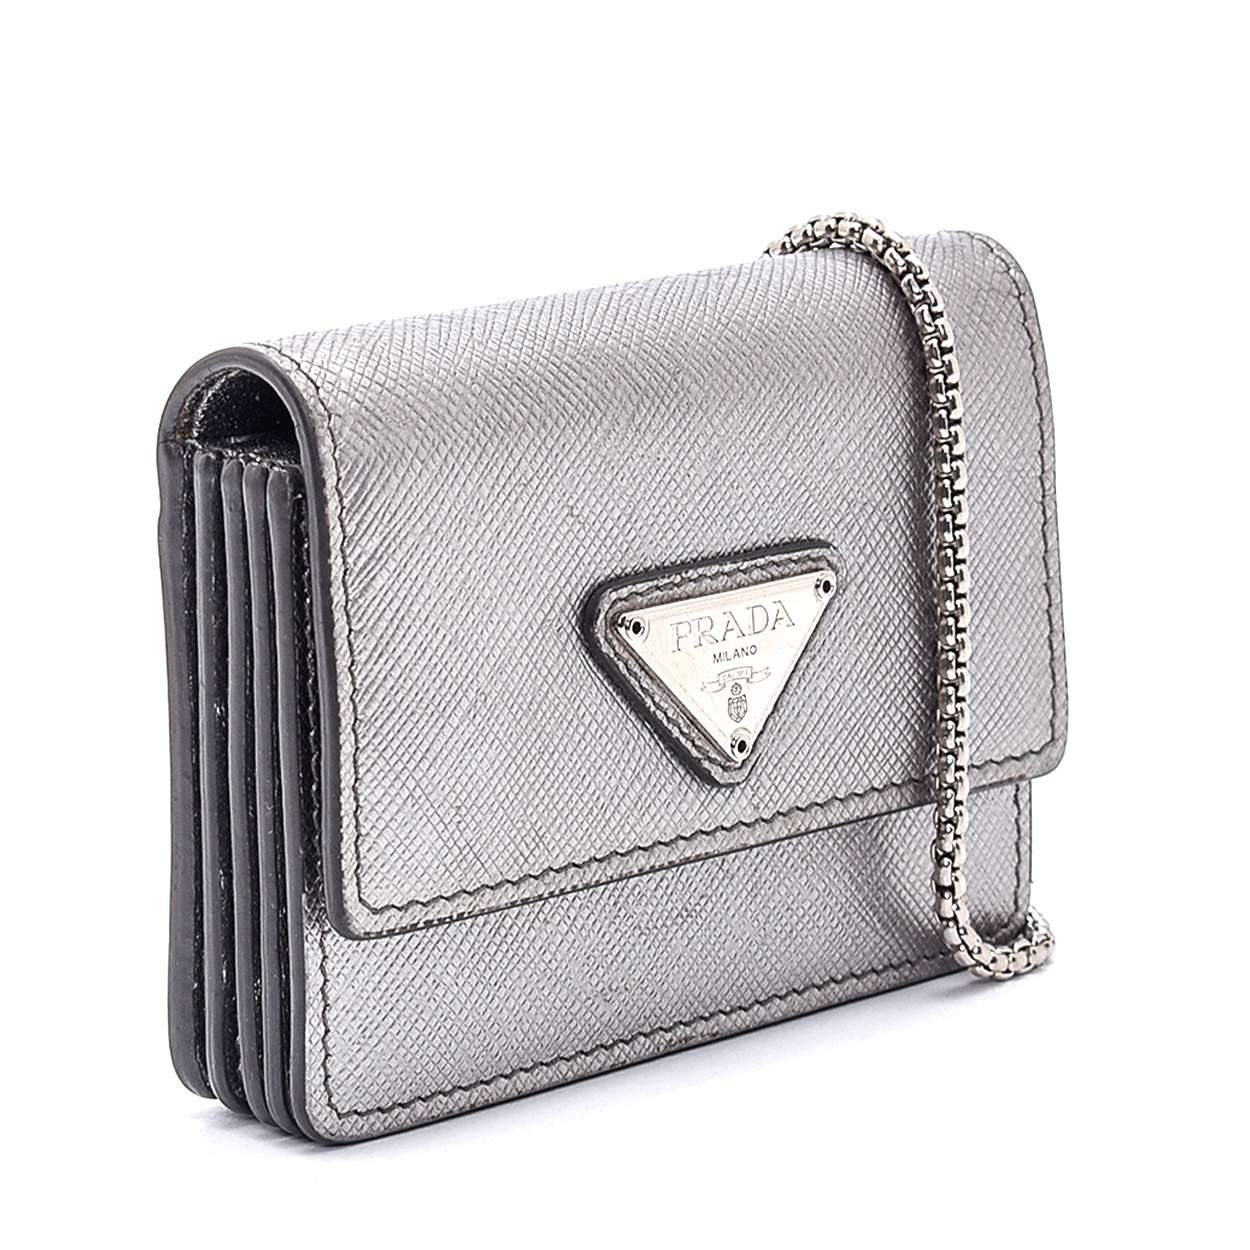 Prada - Metallic Silver Saffiano Leather Crossbody and Card Holder